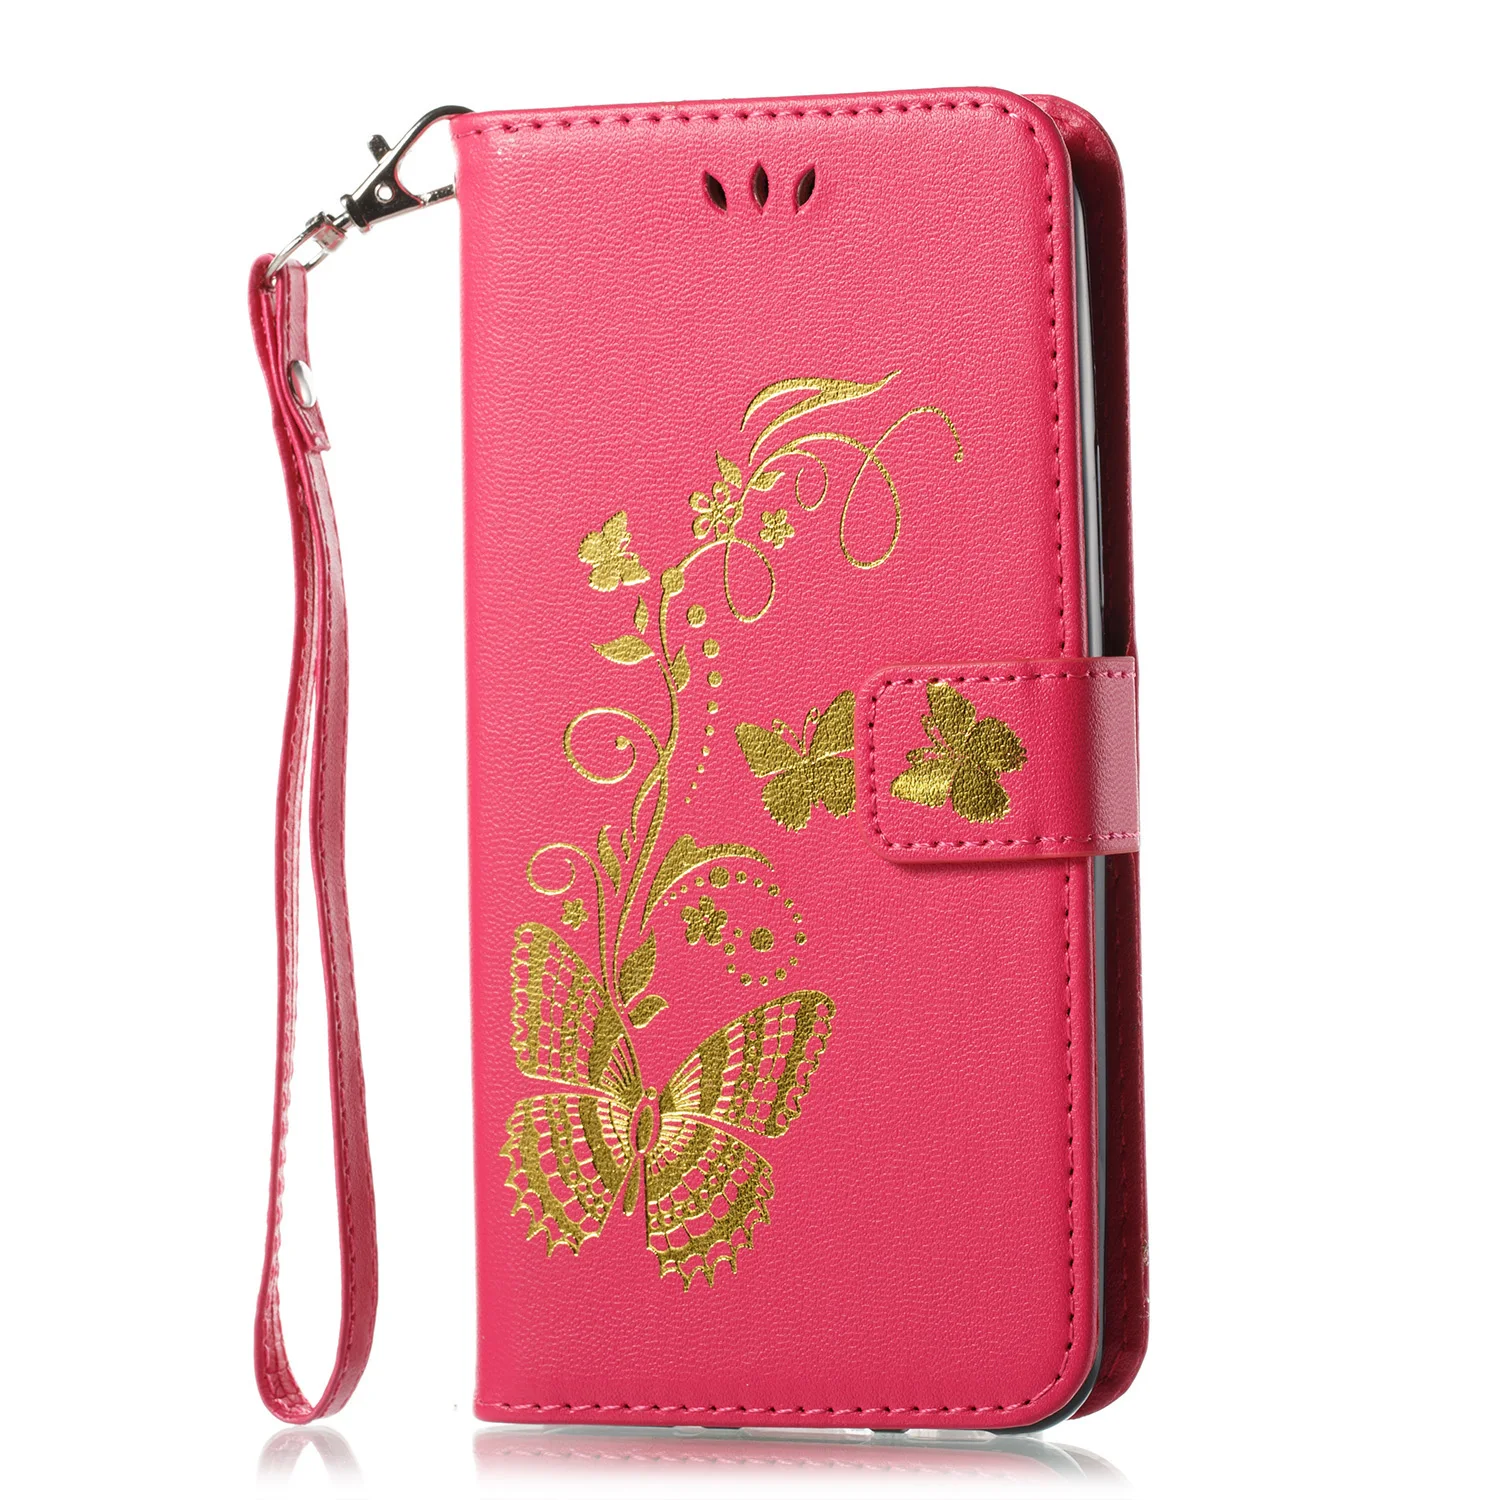 Флип-чехол для huawei Honor 4C Pro TIT L01 U02 кошелек с бабочкой кожаный чехол для Honor C4 Pro TIT-l01 4CPro c4 сумка - Цвет: Rose red